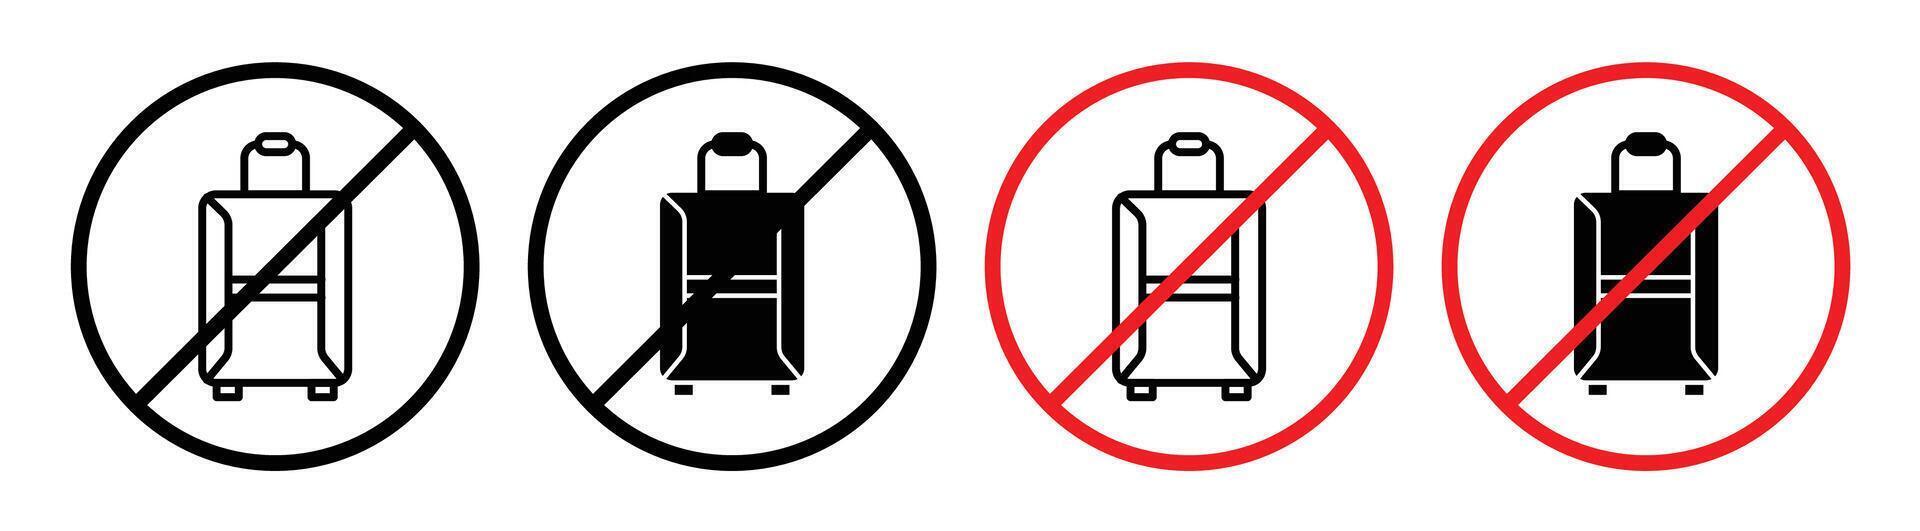 prohibido equipaje firmar vector